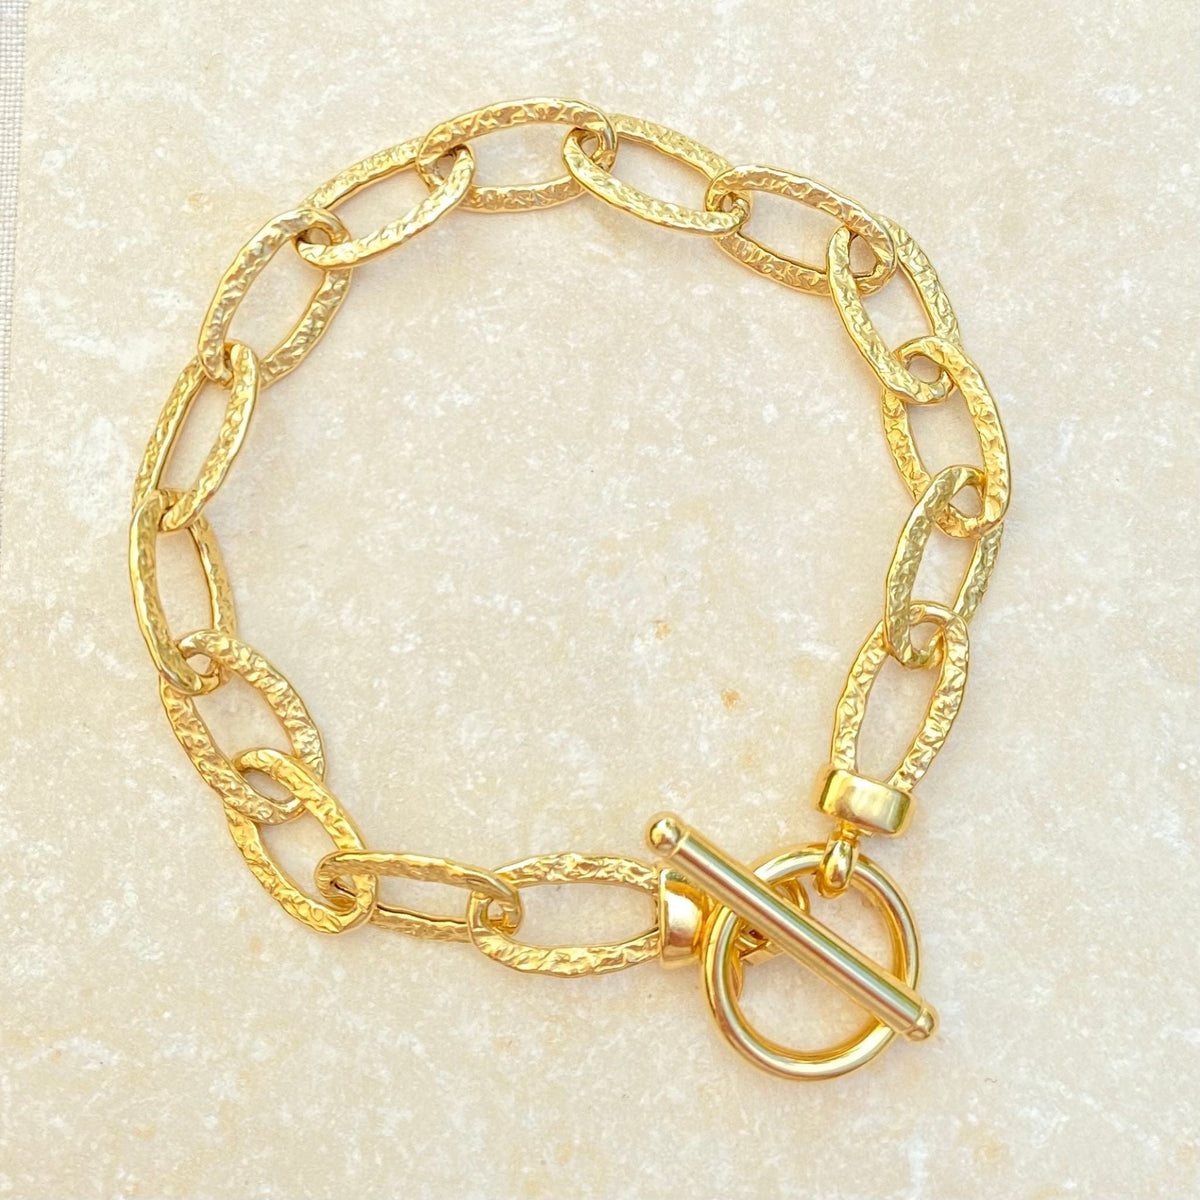 Sisterhood Bracelet - Chunky Chain Link Bracelet